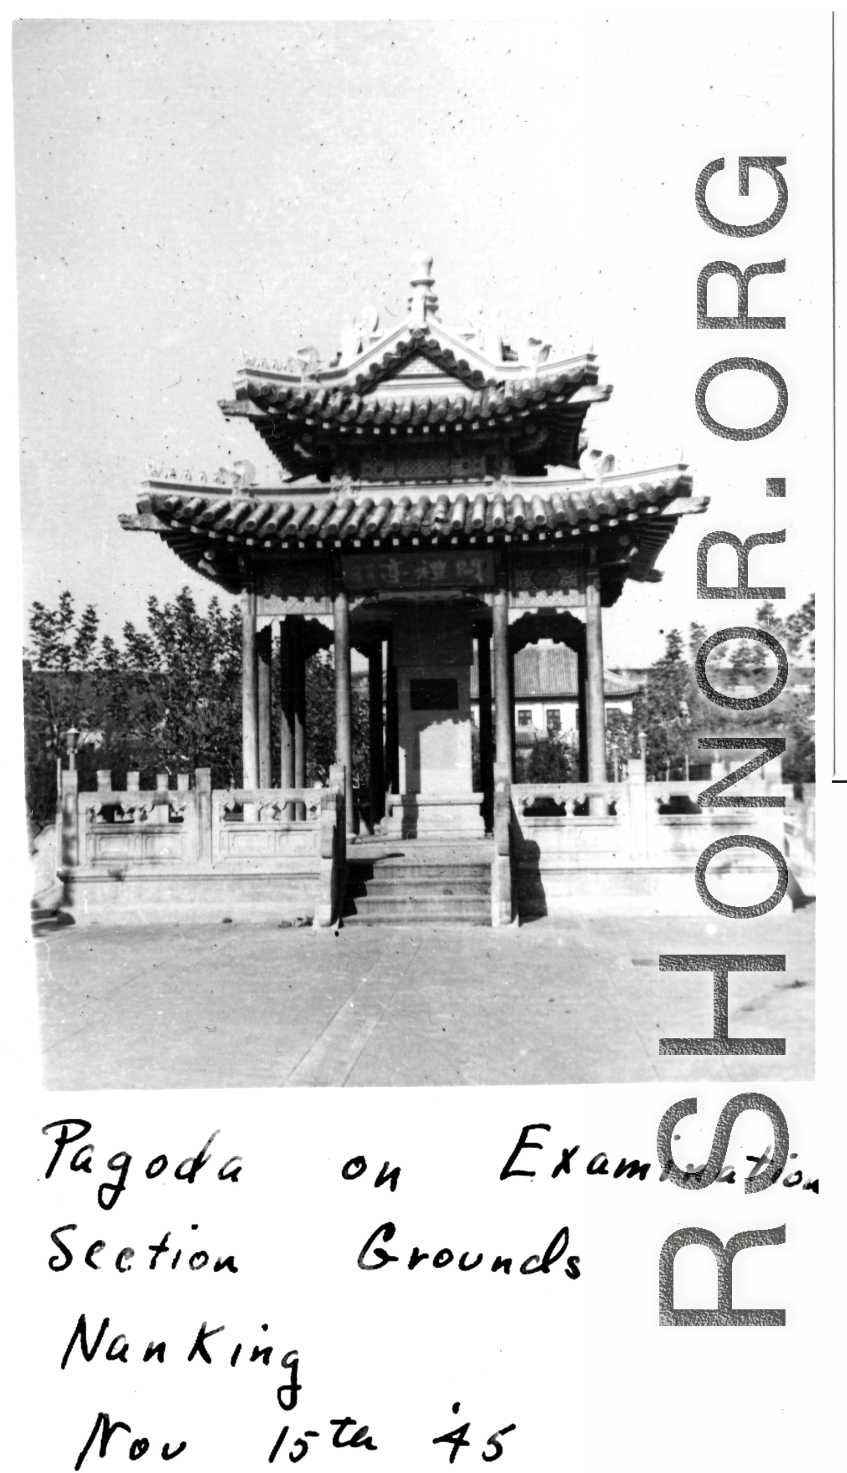 Pagoda on Examination Section grounds, Nanjing, November 15, 1945.